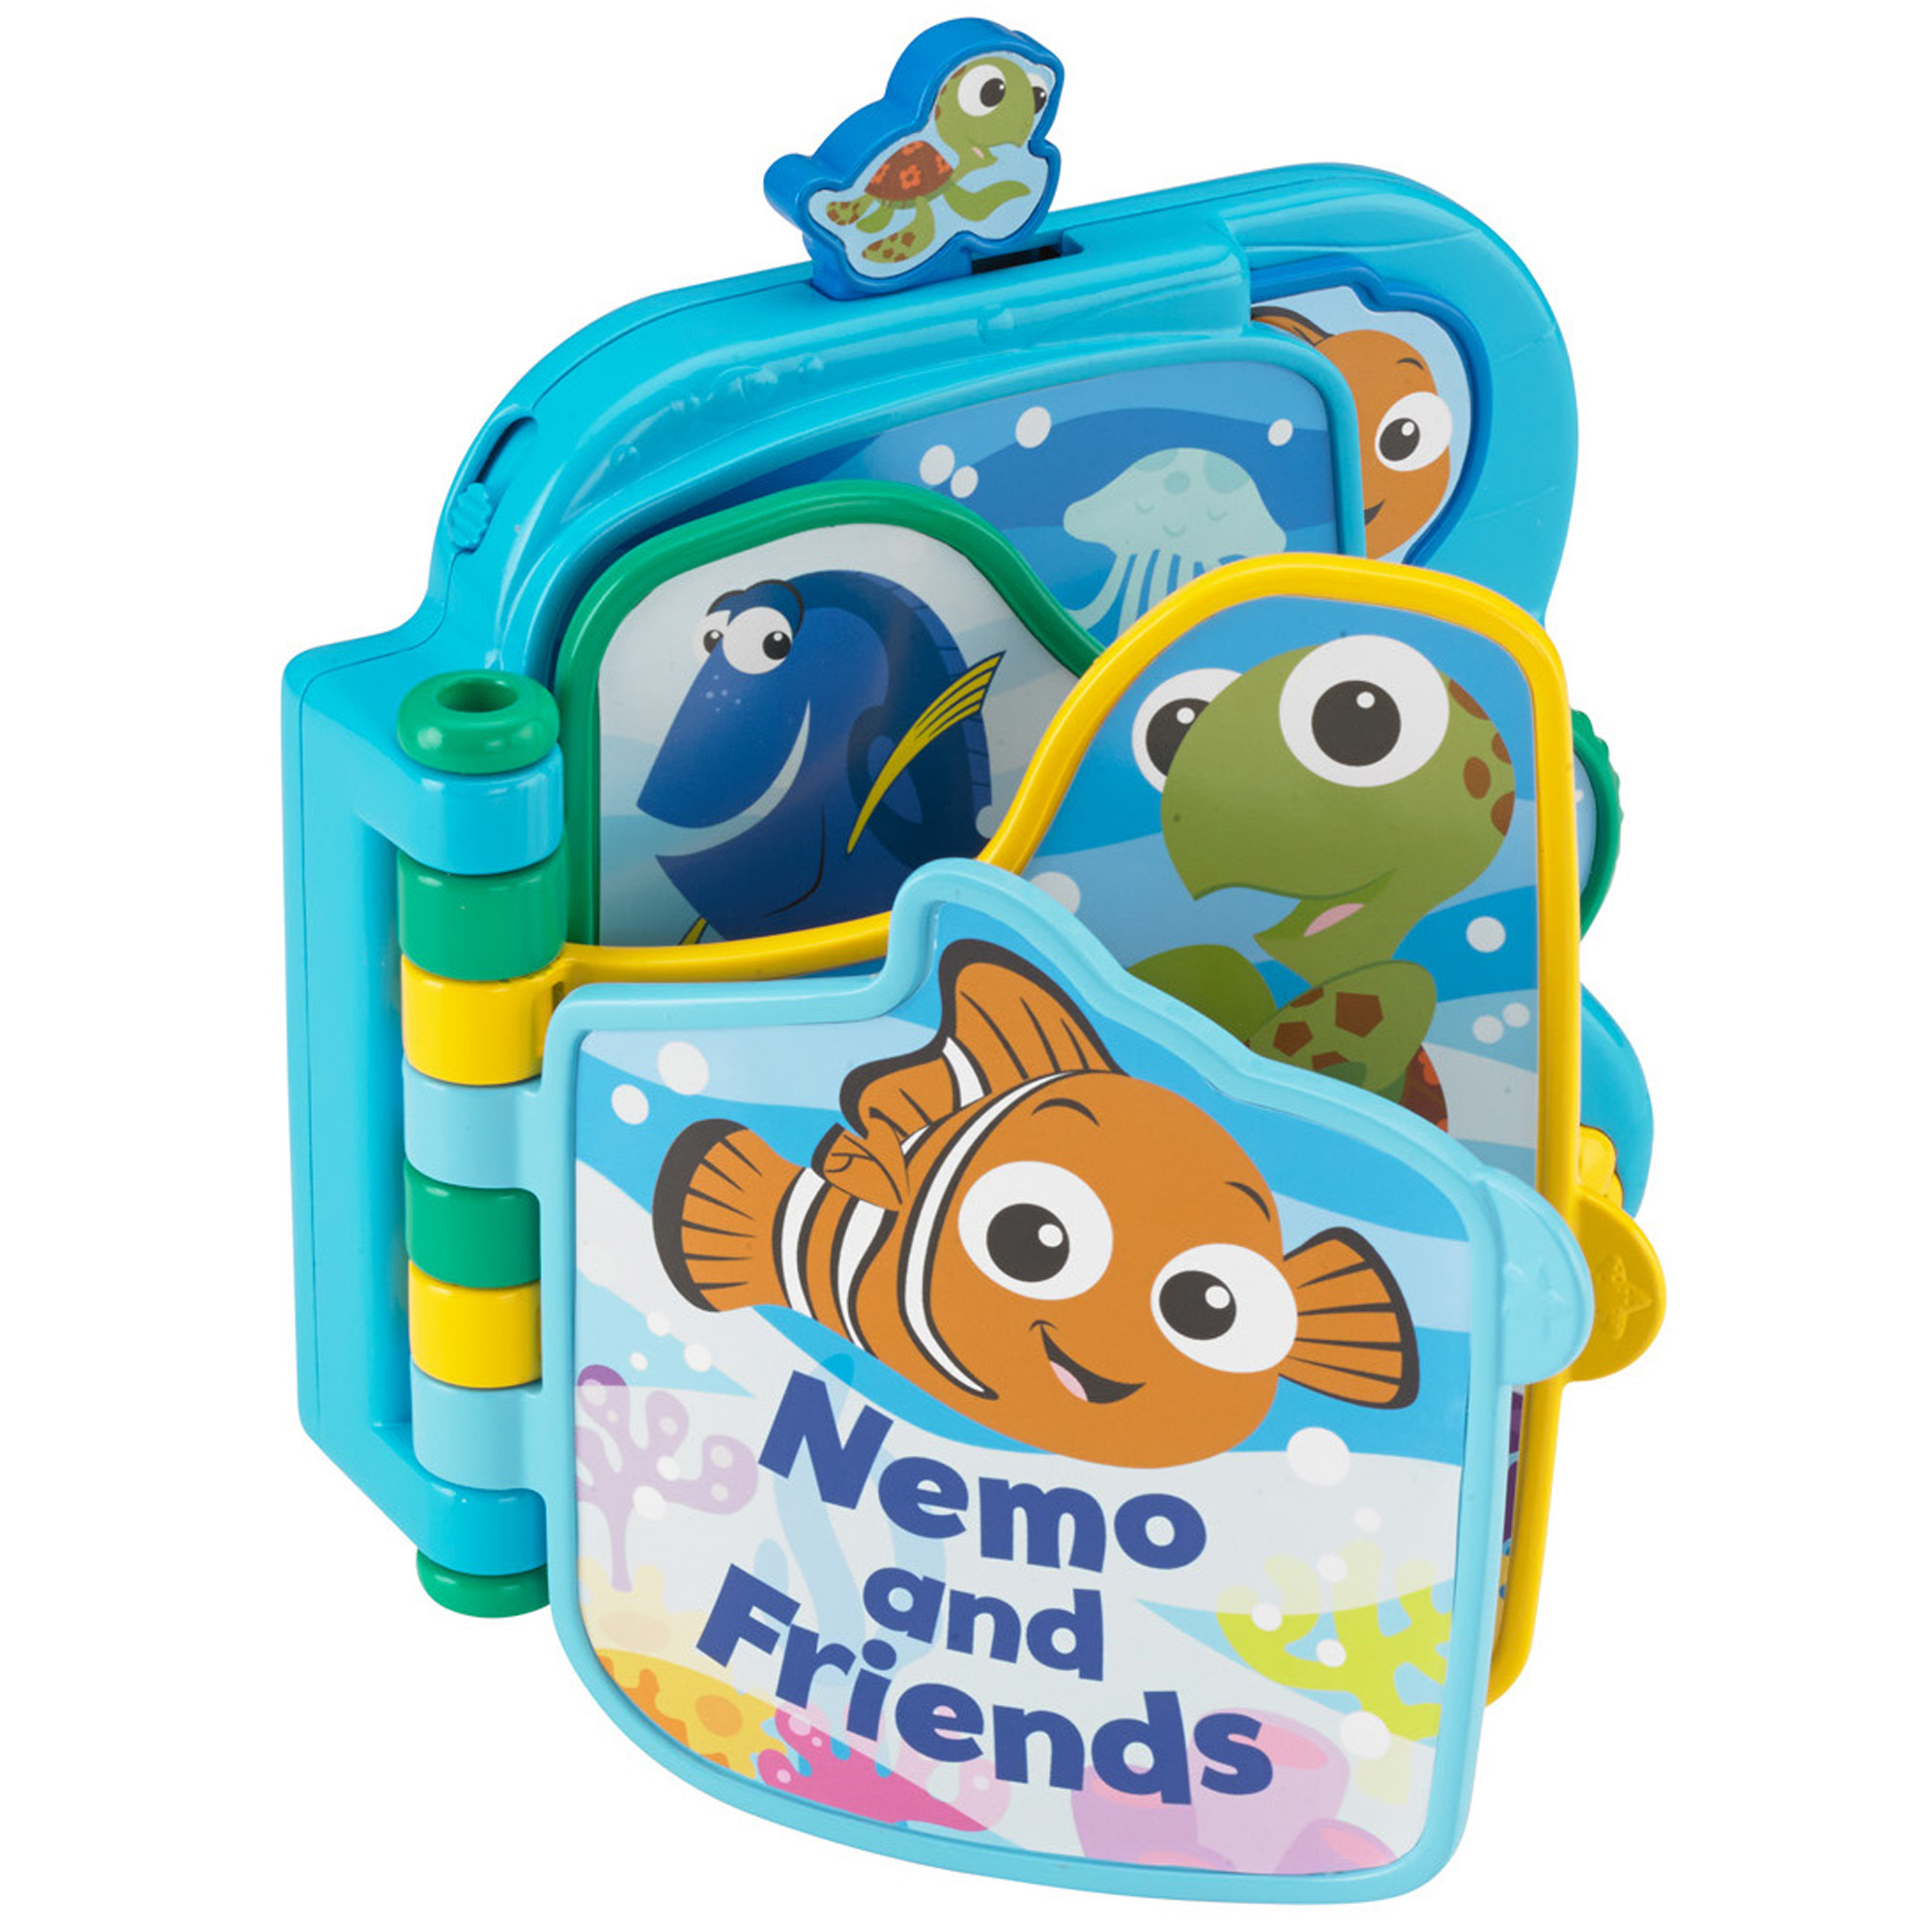 Disney Baby: Nemo and Friends Book